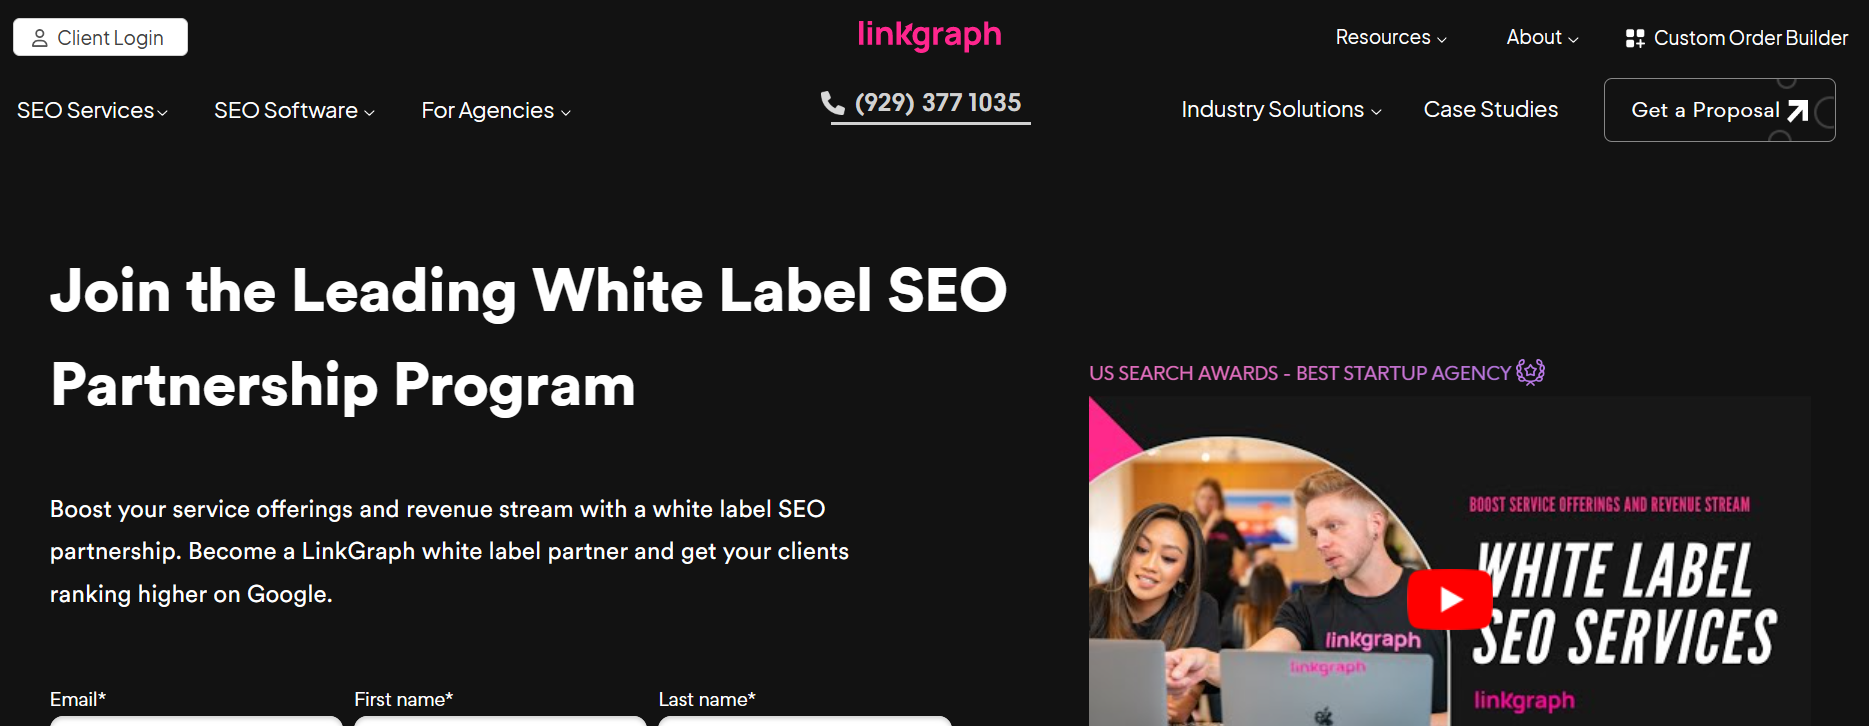 Linkgraph Site Screenshot